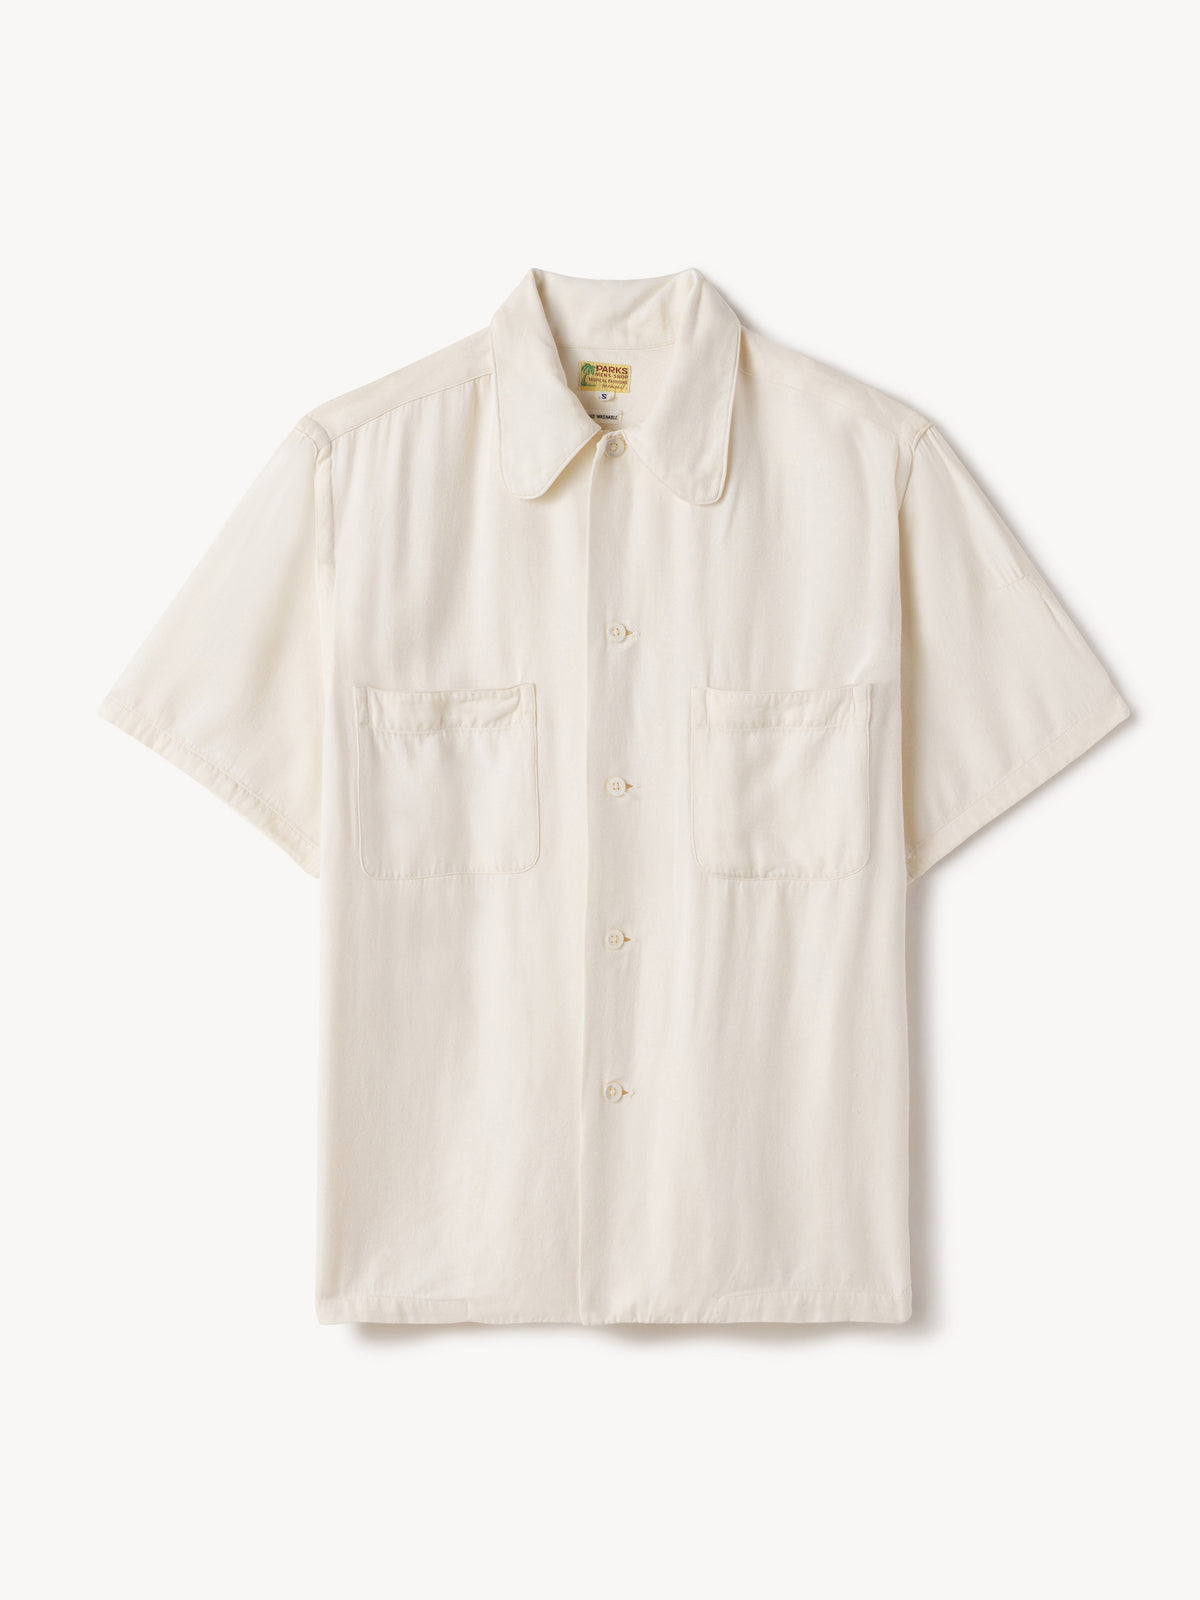 HBT Short Sleeve Shirt - 0133 - Product Flat